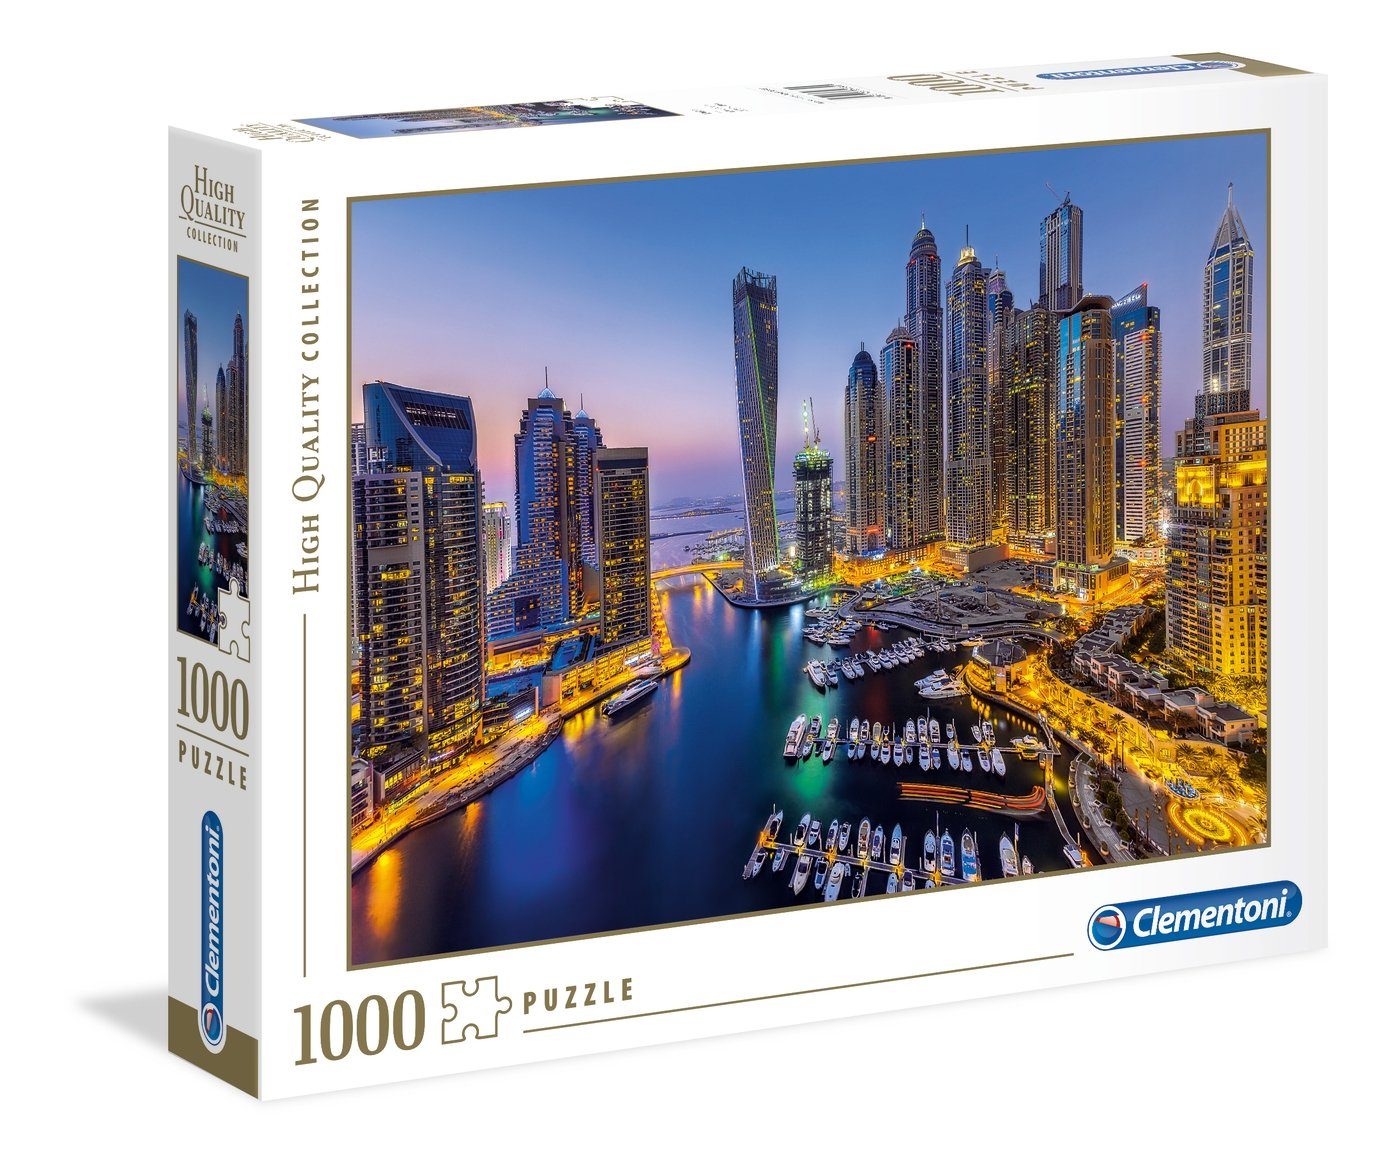 niedrigeren Preis kaufen Clementoni® Puzzle Clementoni Teile Puzzleteile Dubai 39381 1000 Puzzle